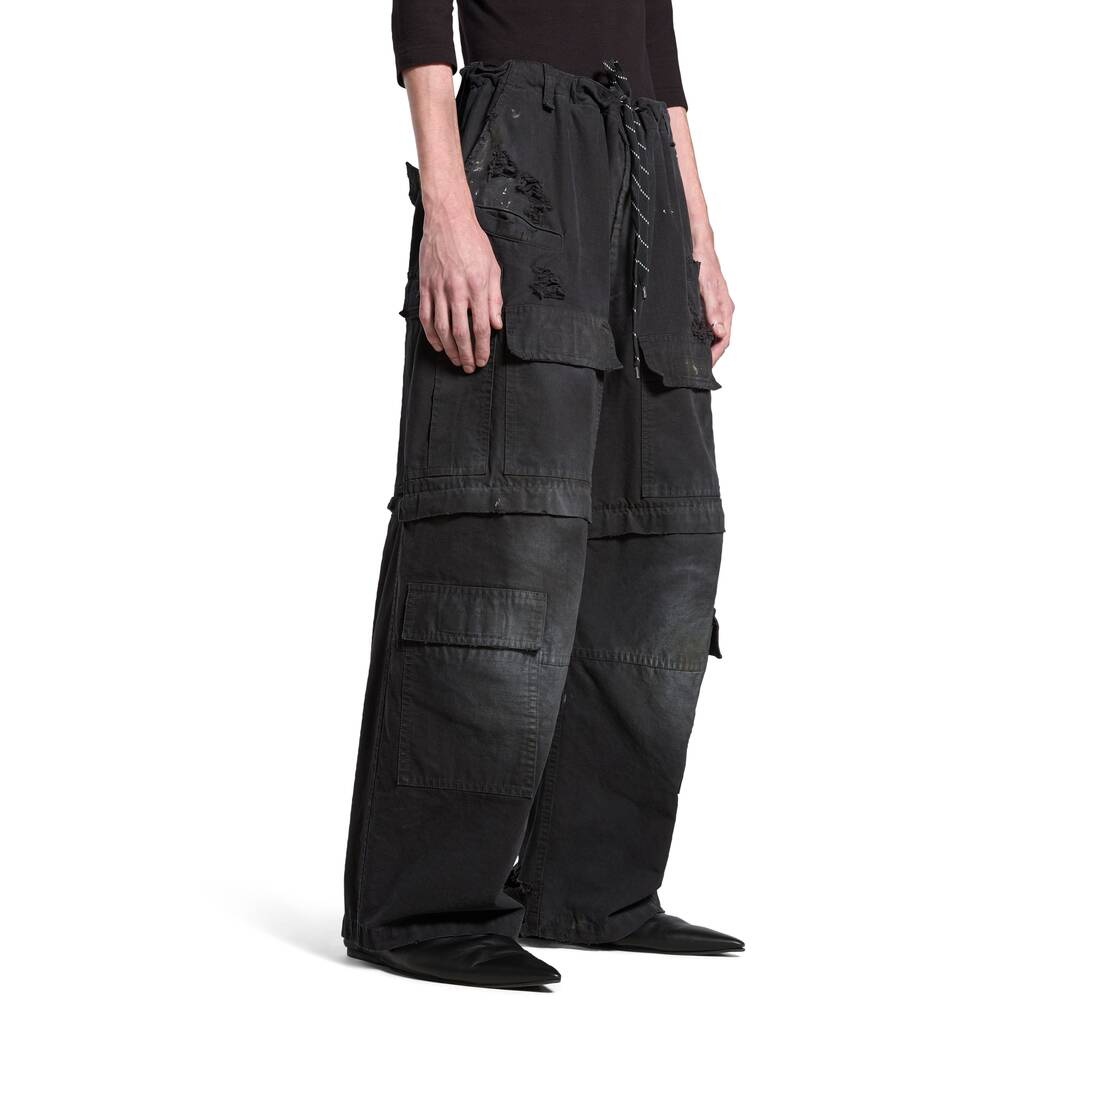 Balenciaga Large Cargo Pants in Black - 5